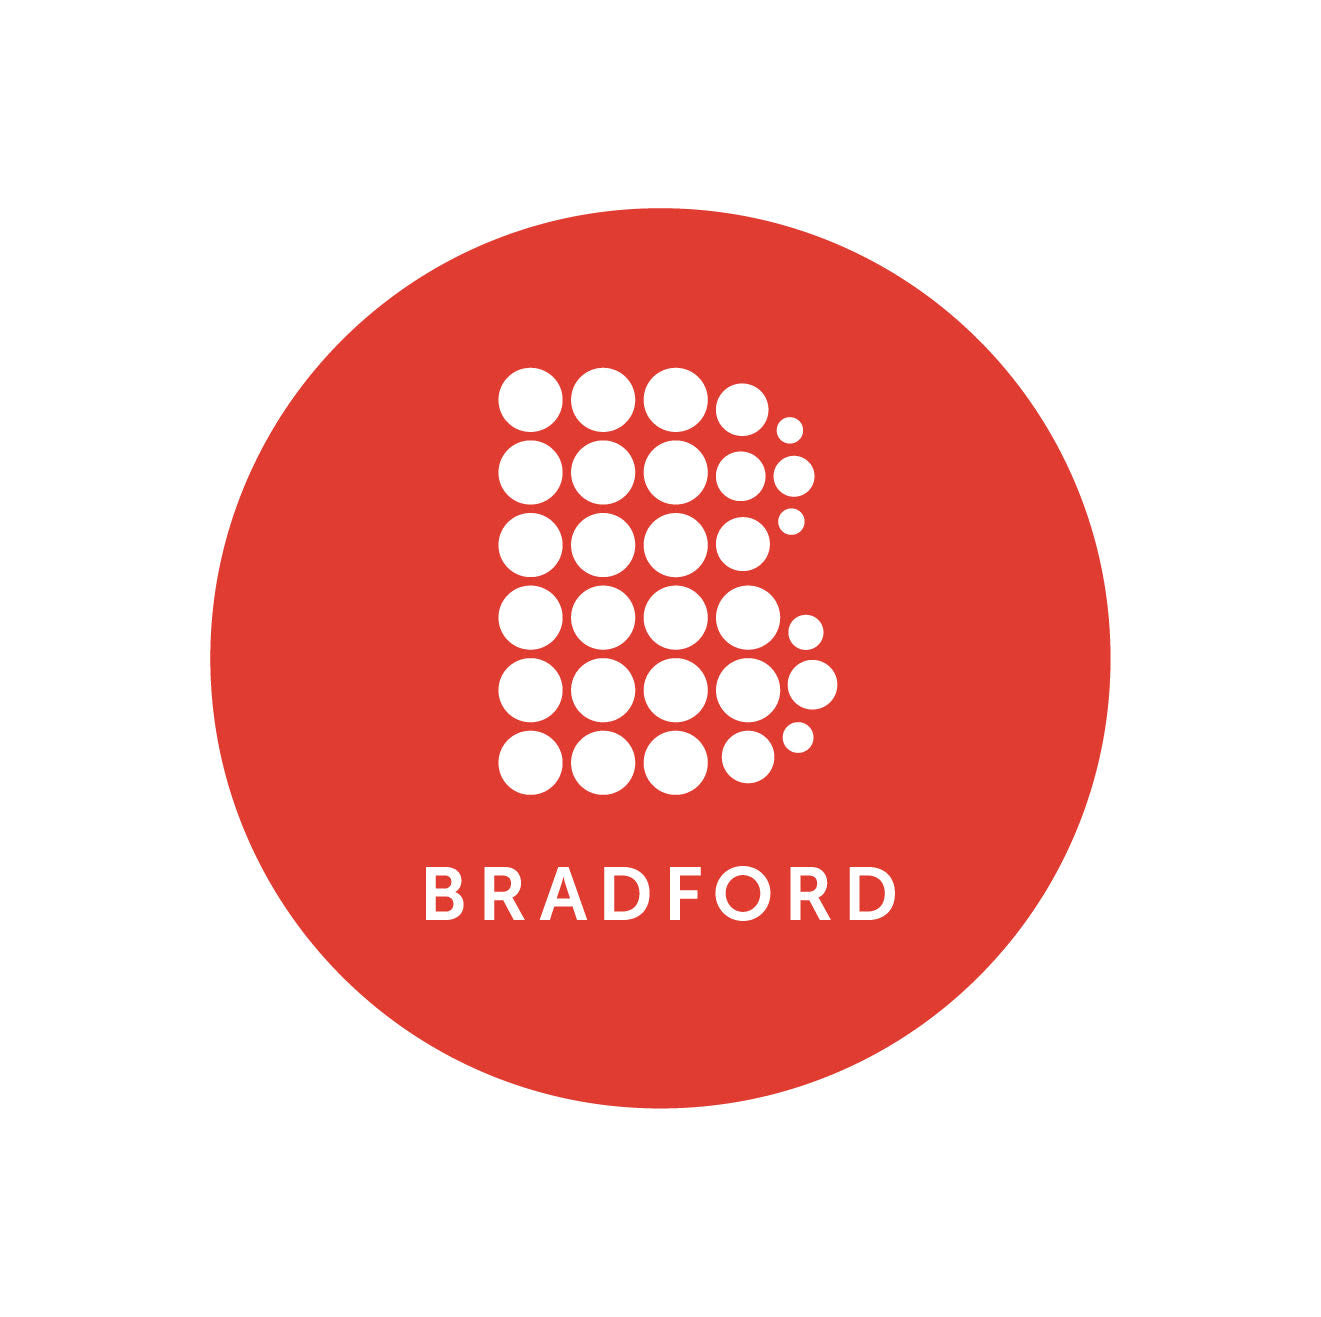 Bradford Soap Works, Inc.